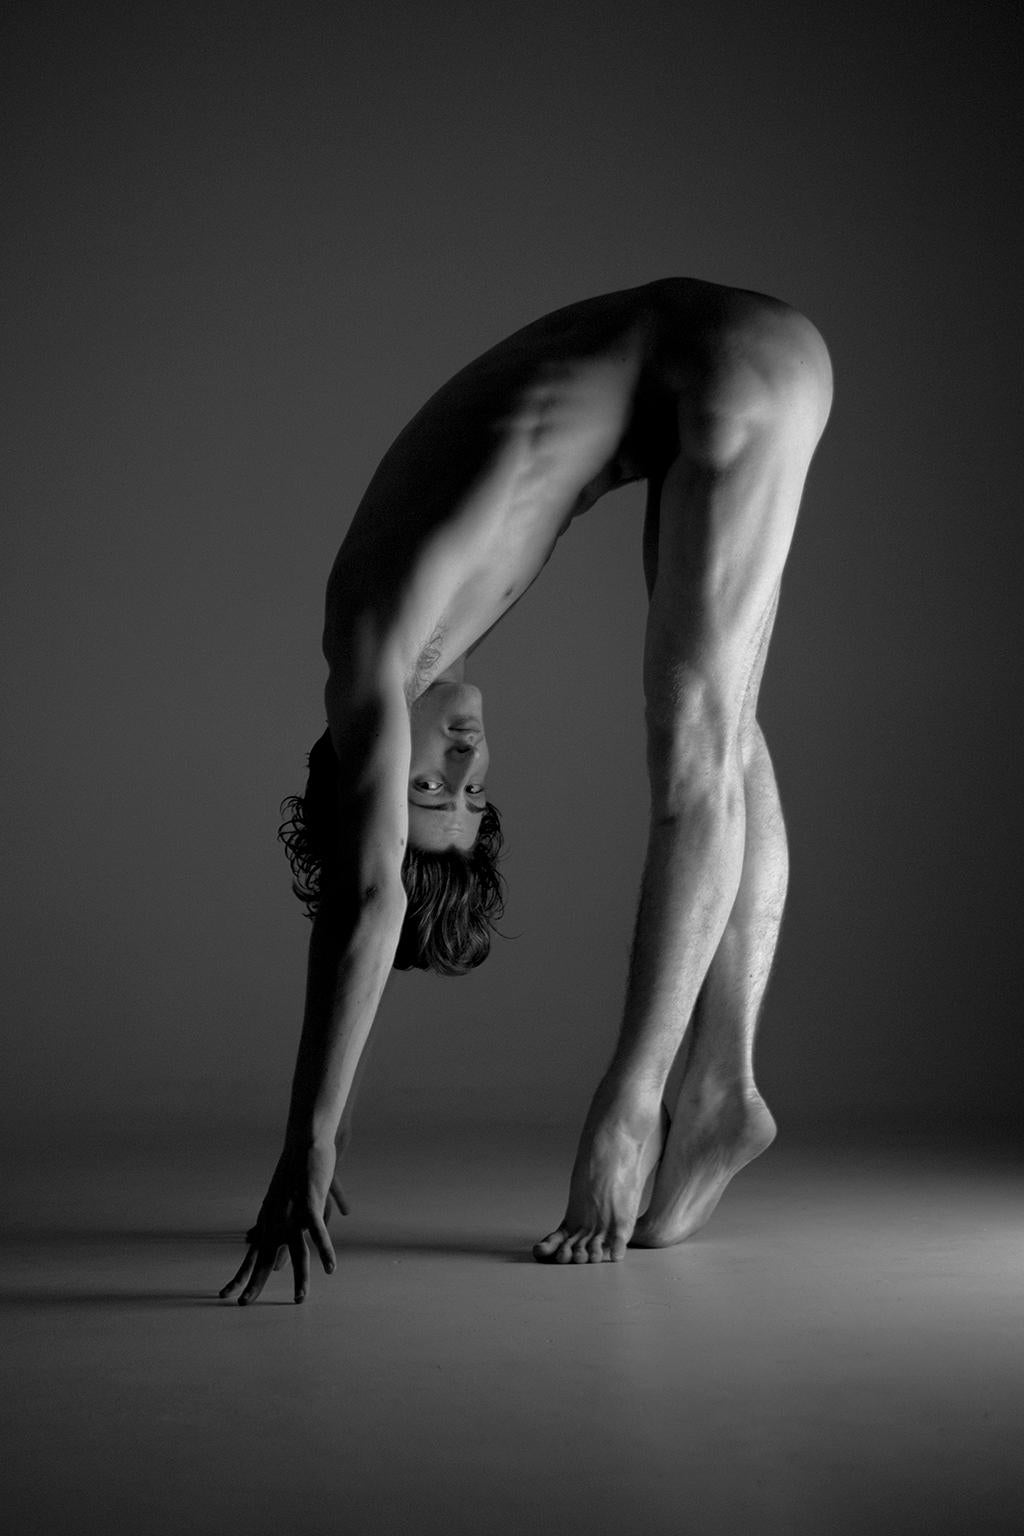 Ricky Cohete Black and White Photograph - Bailarin I. The Bailarín, series. Male Nude dancer. Black & White photograph